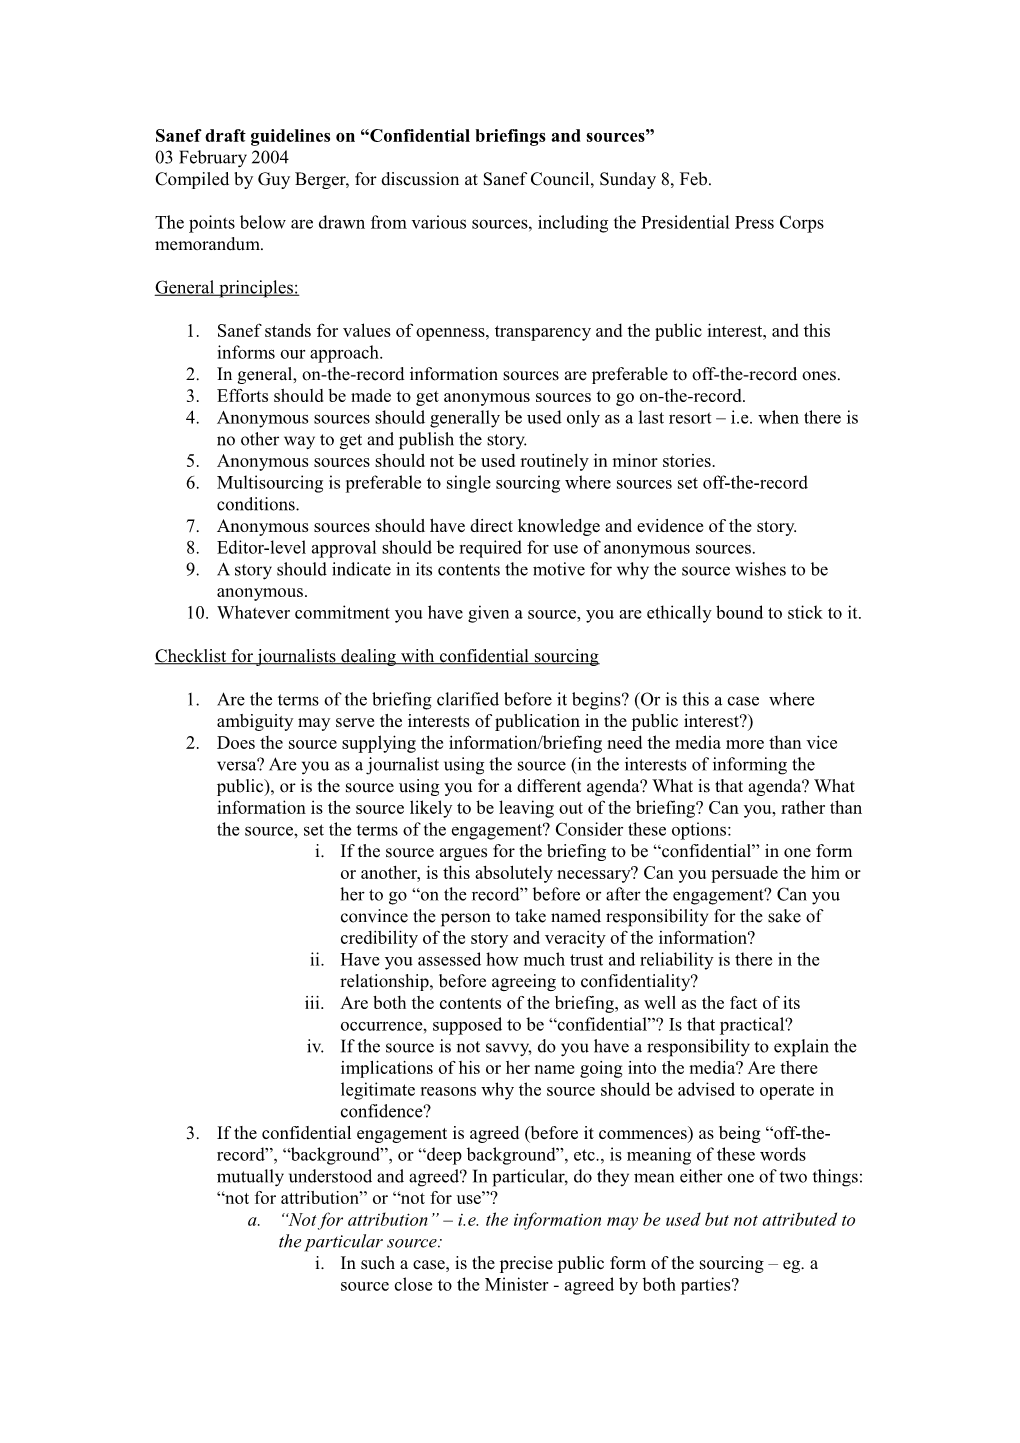 Sanef Draft Checklist on Confidential Briefings